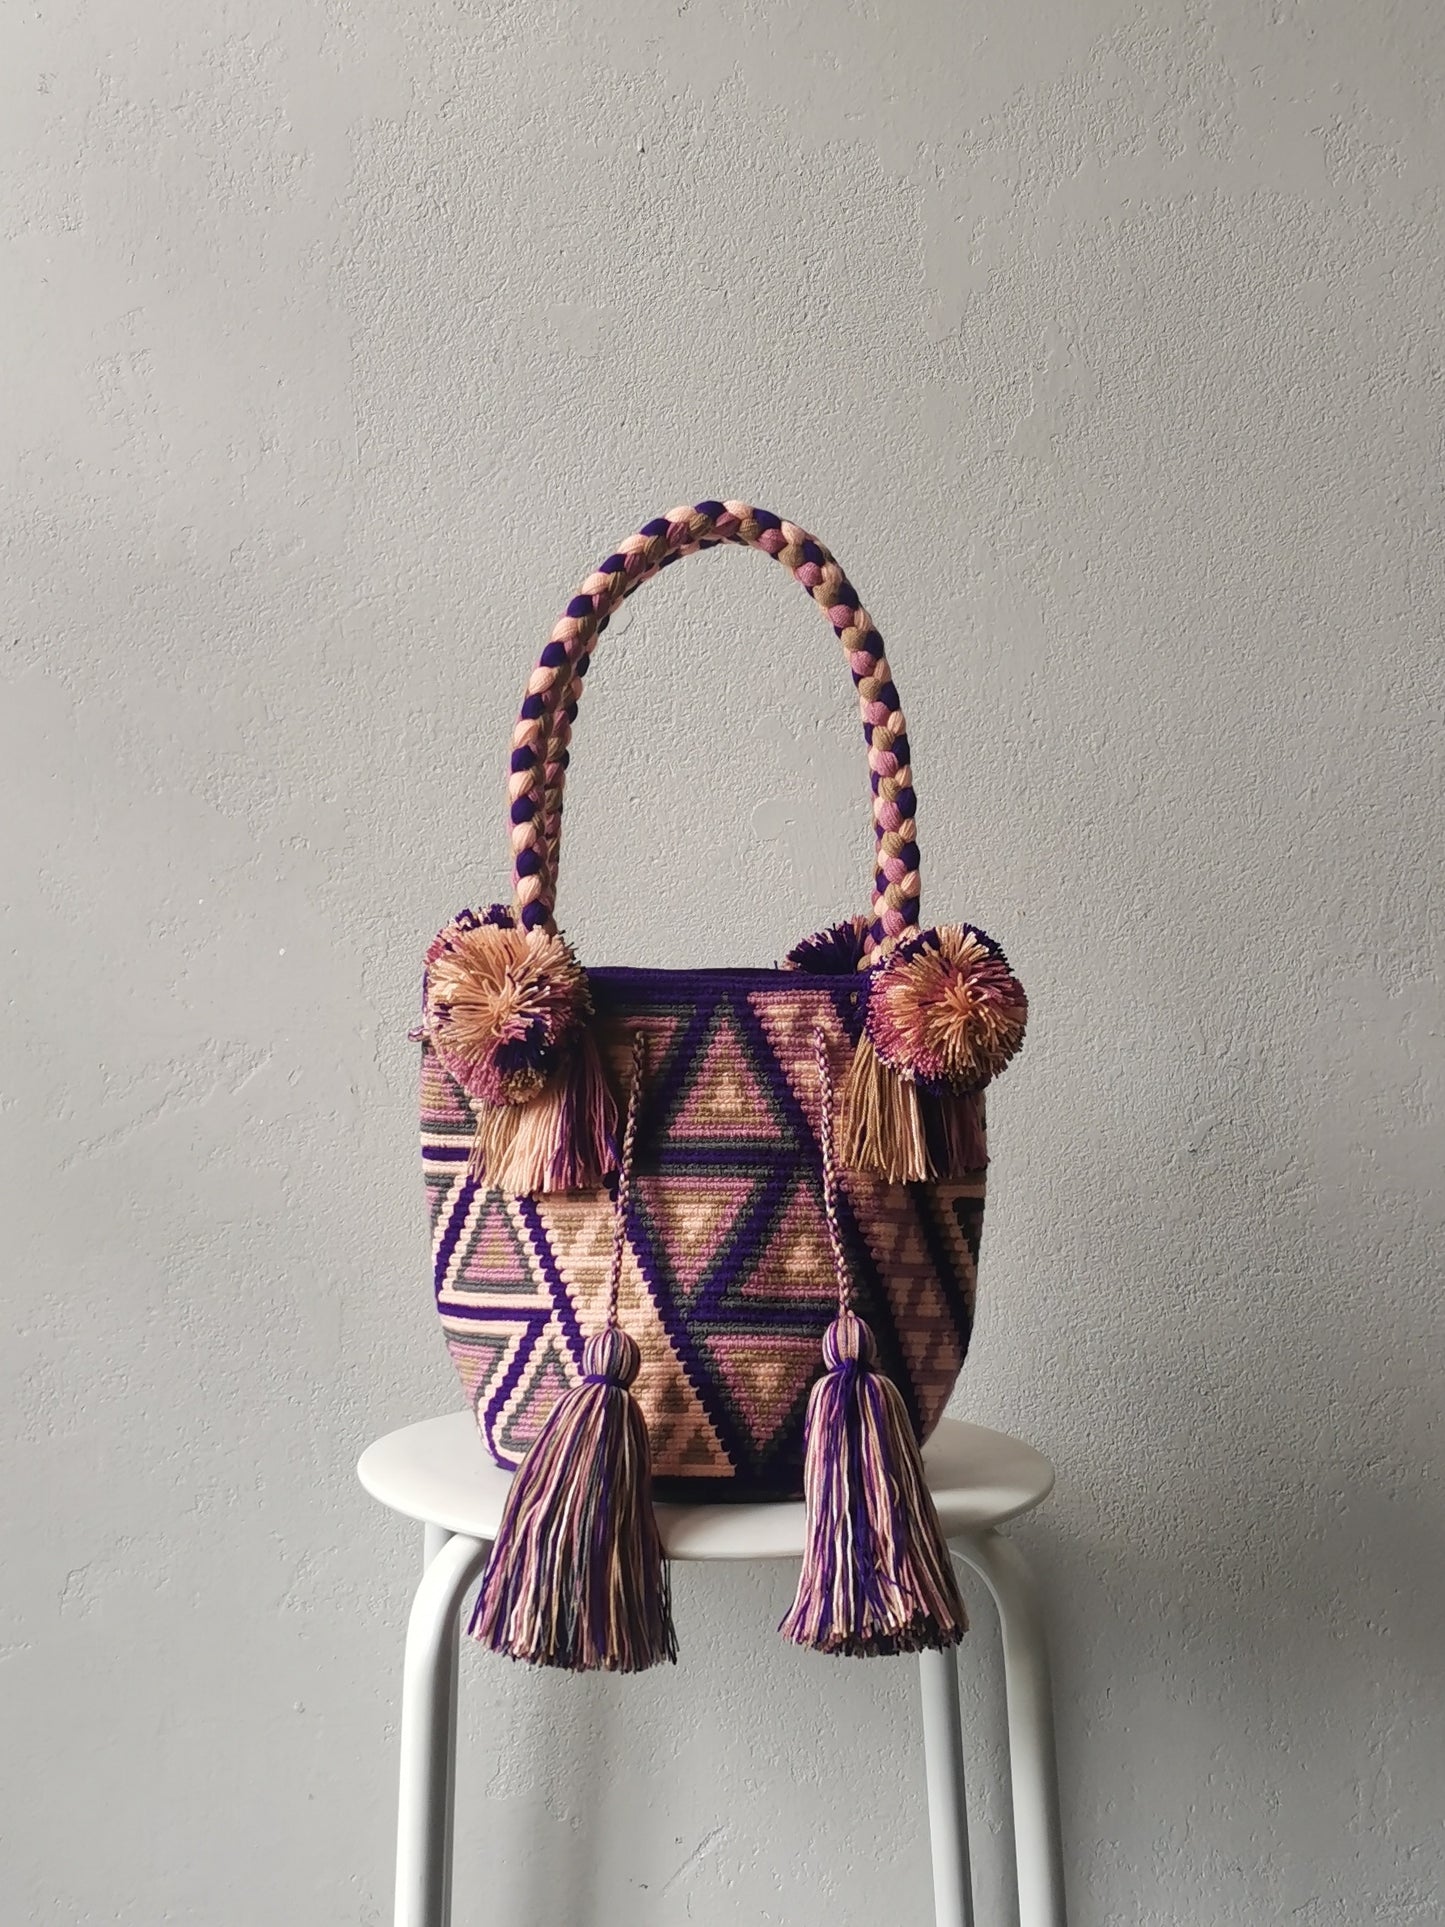 M purple and pink mochila handbag